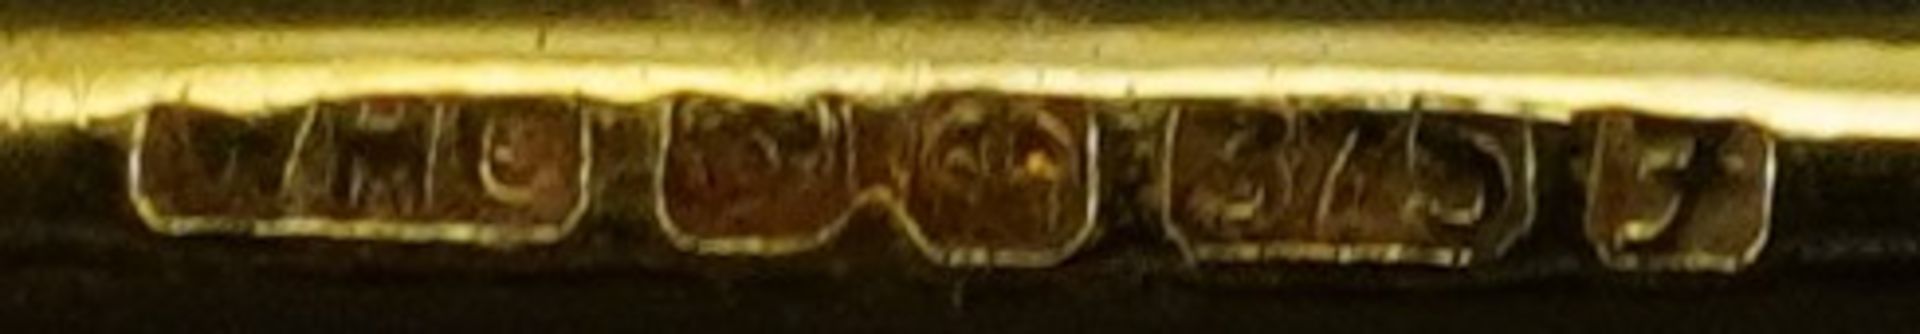 Pair of 9ct gold cultured pearl stud earrings, 7mm in diameter, 1.1g - Image 3 of 3